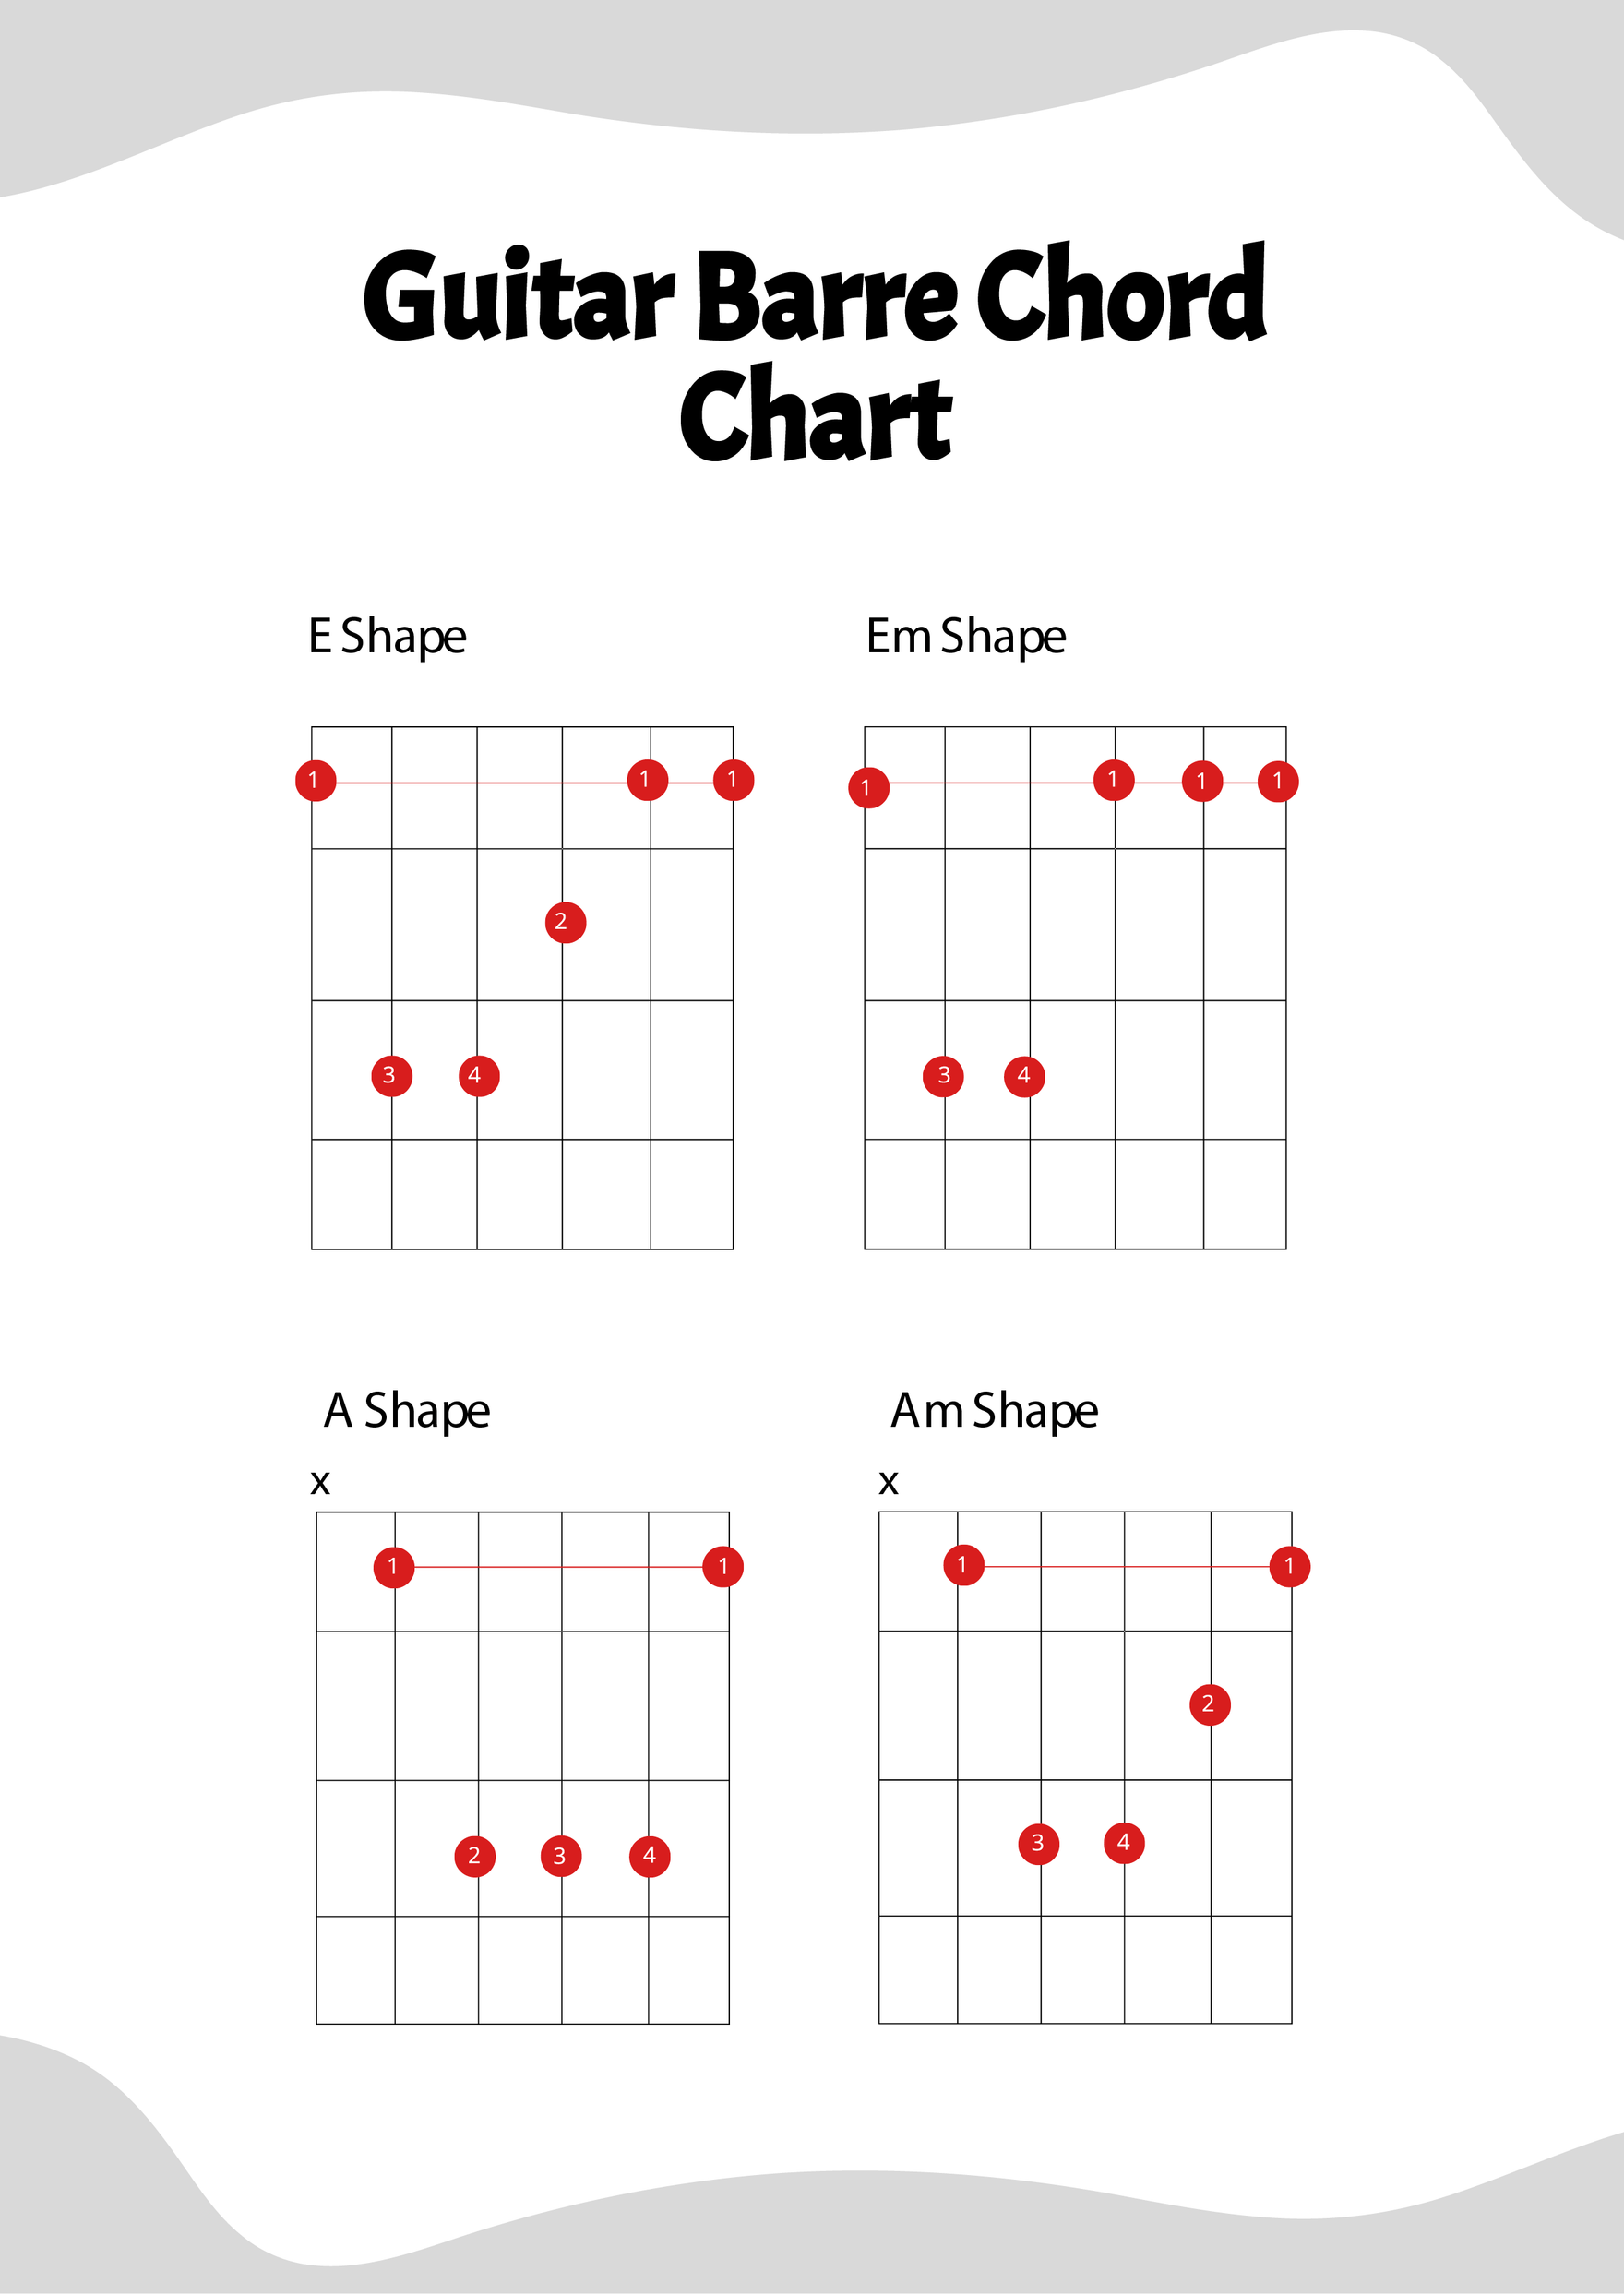 Guitar Barre Chord Chart